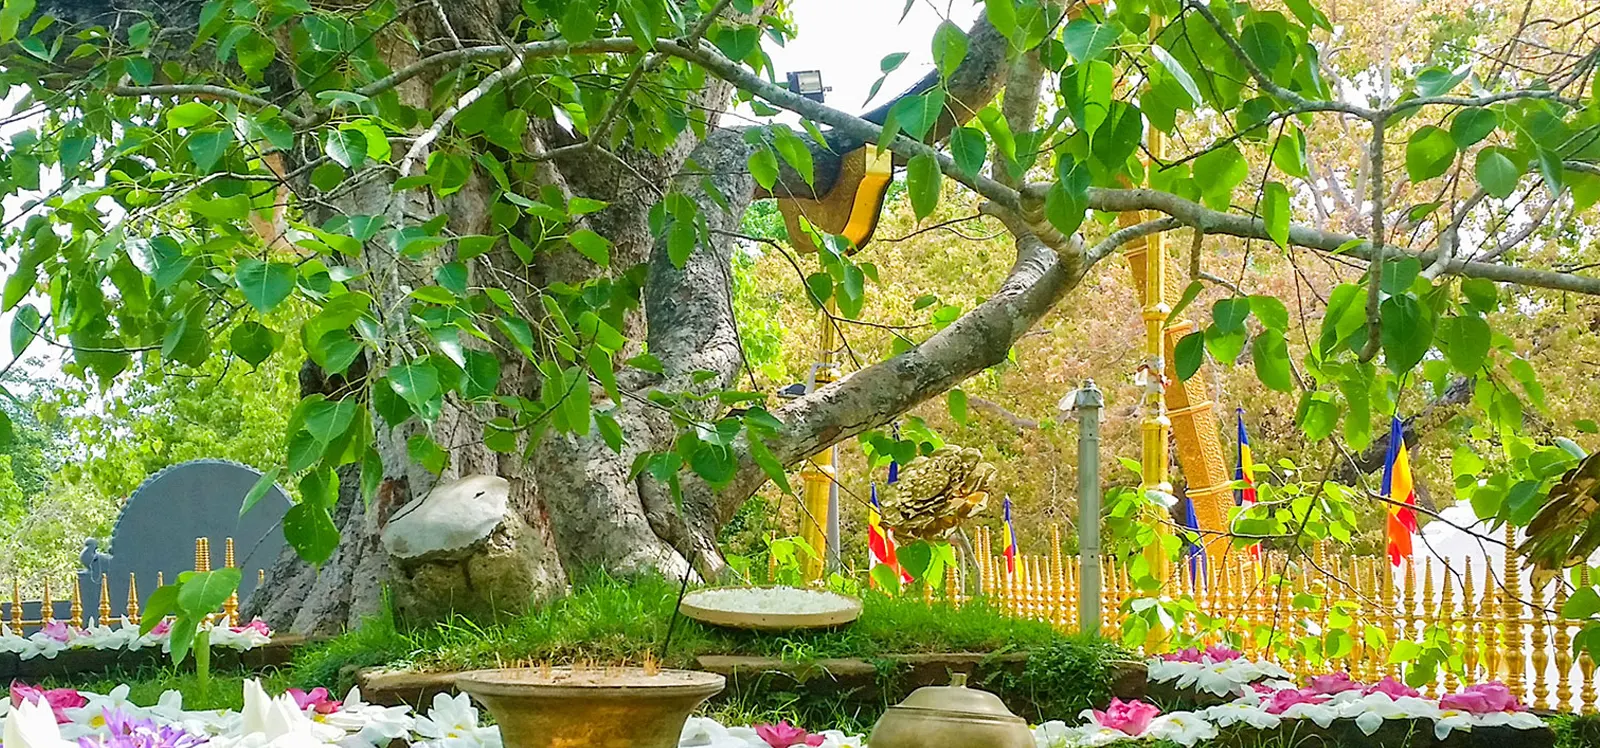 Jaya Sri Maha Bodhi: The World's Oldest Living Tree